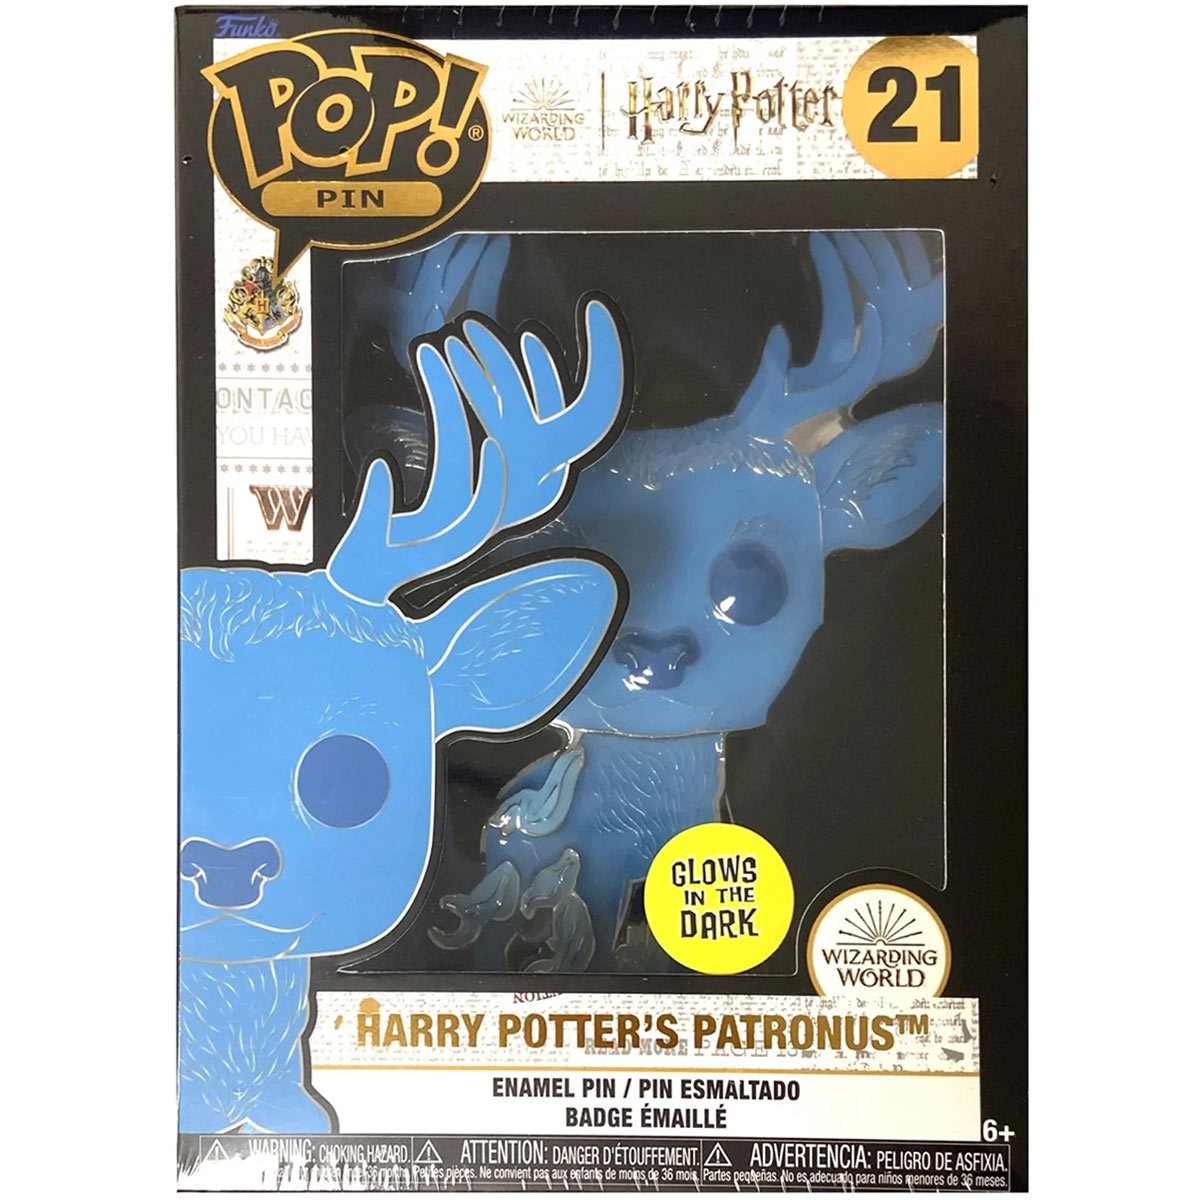 Udstyre Kabelbane Måned Harry Potter Wizarding World Harry Potter Patronus Glow-in-the-Dark Large  Enamel Funko Pop! Pin #21